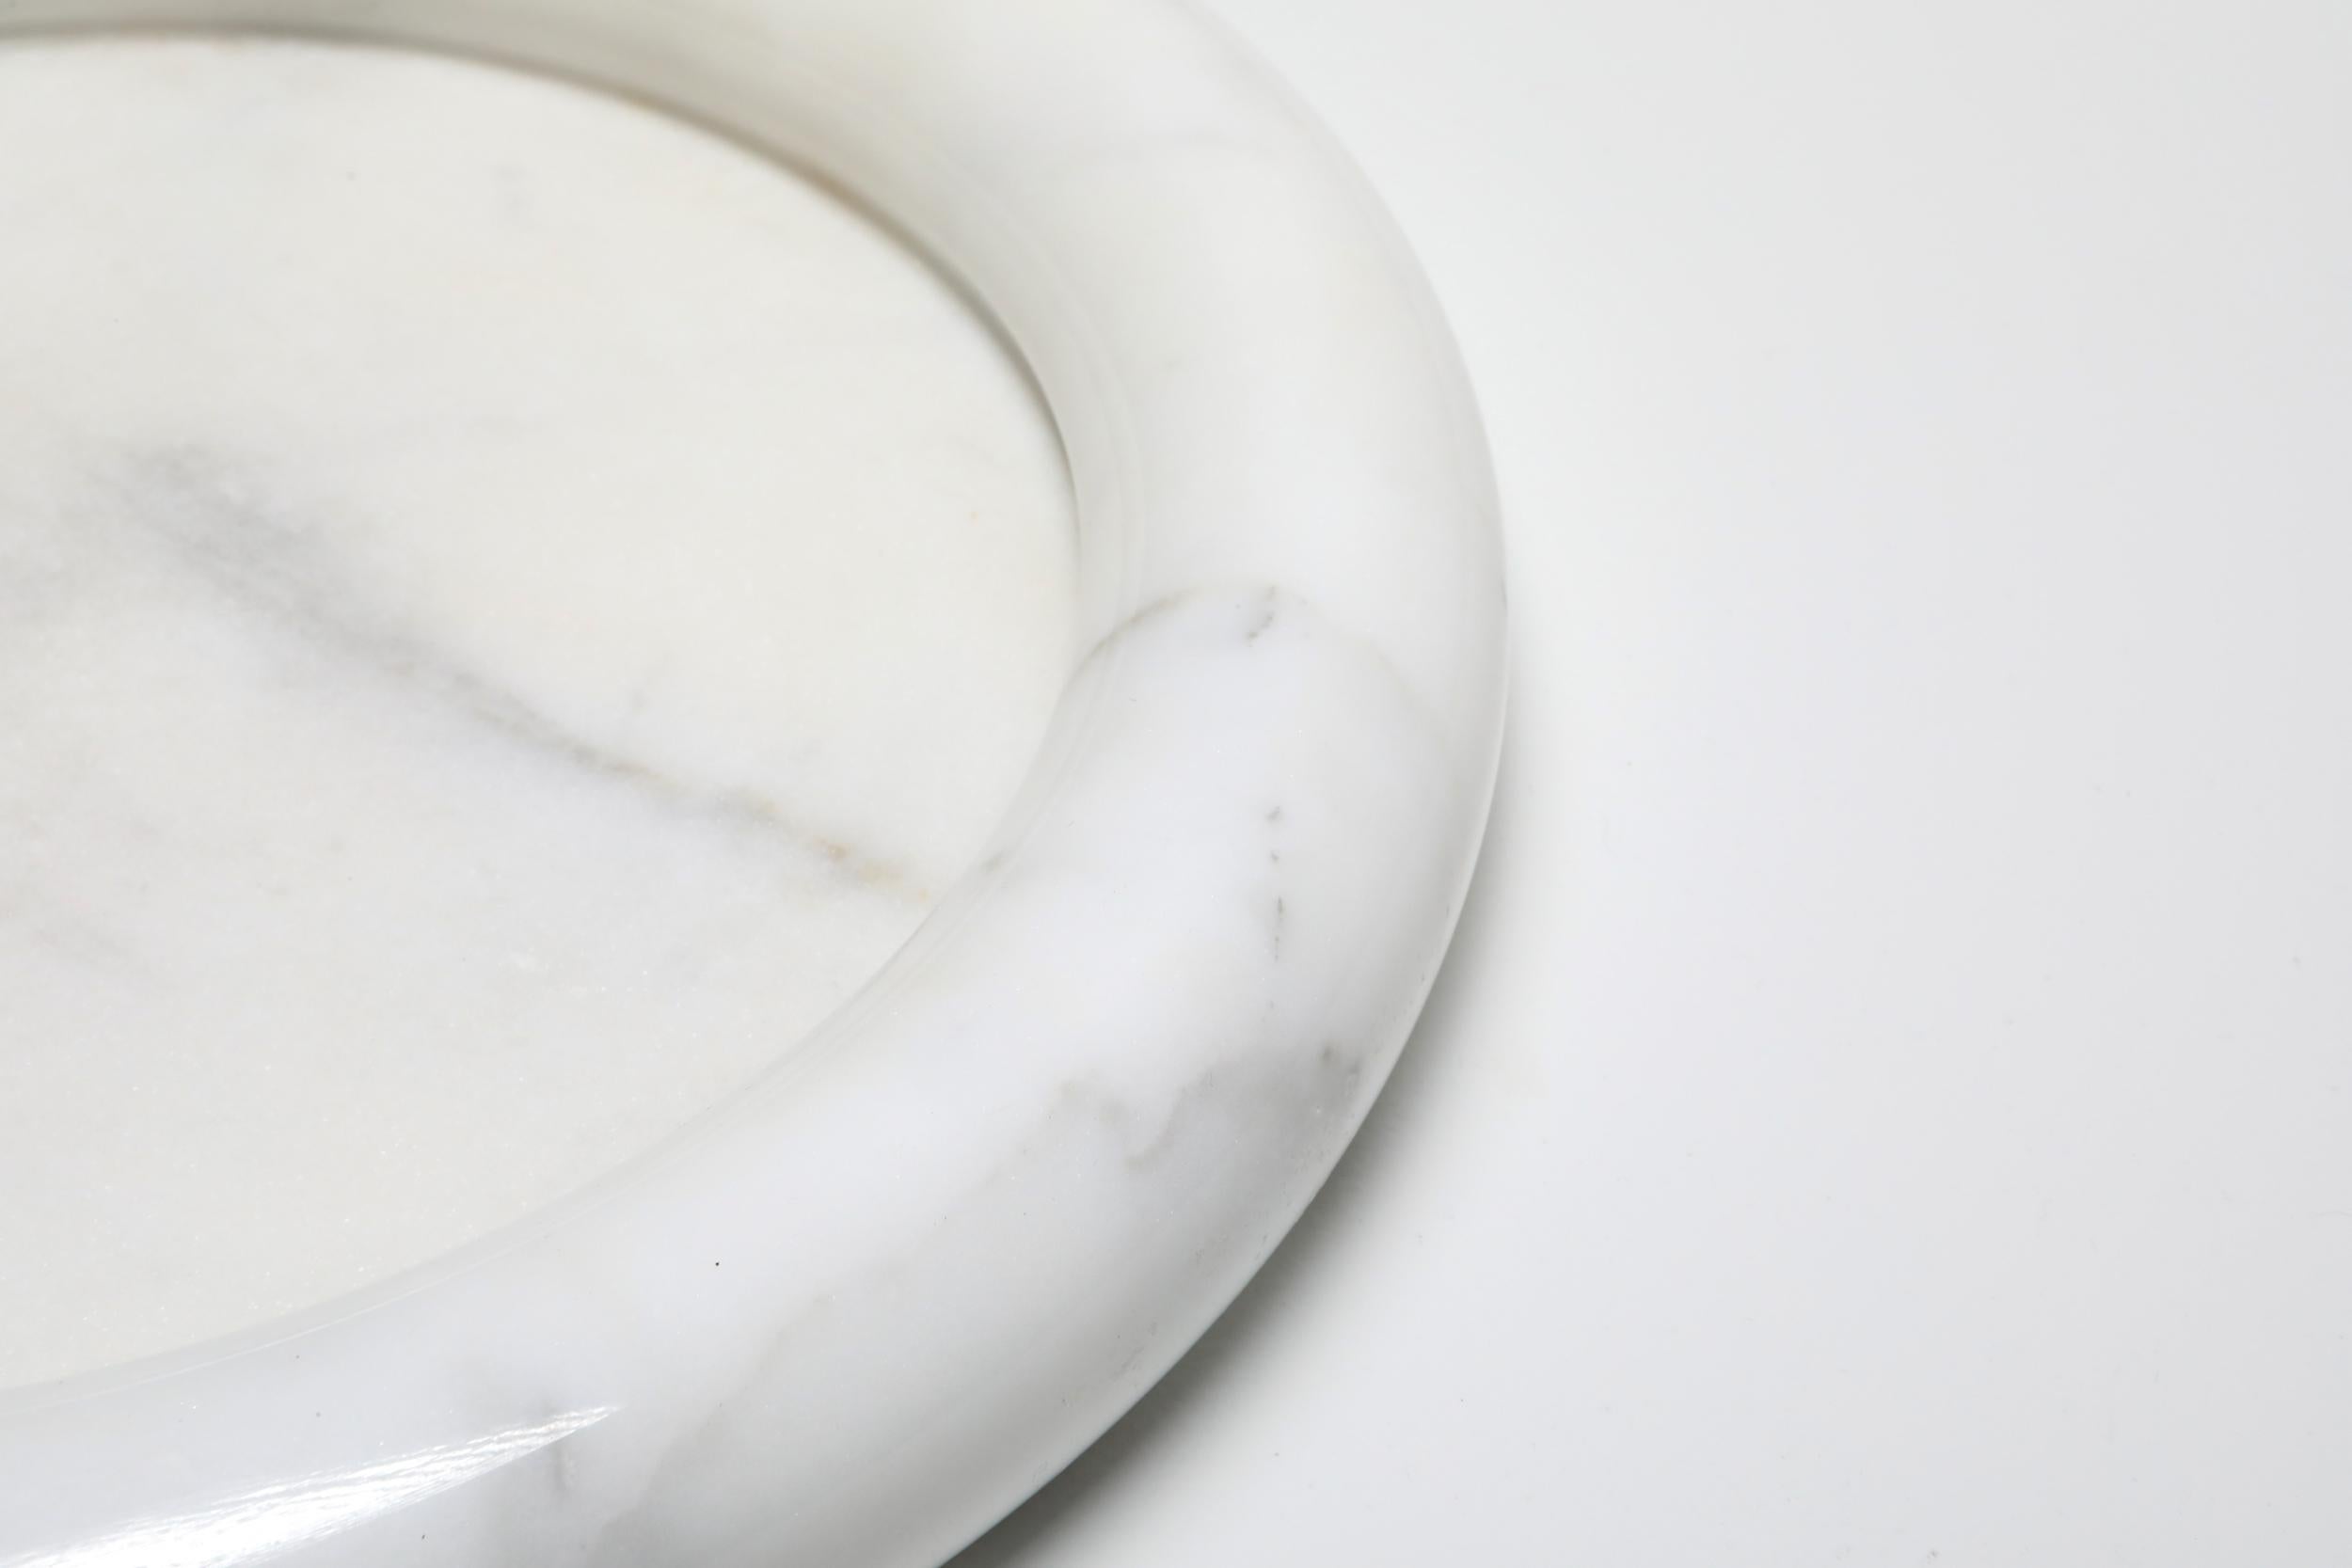 Mangiarotti white Carrara marble bowl, 1970s.